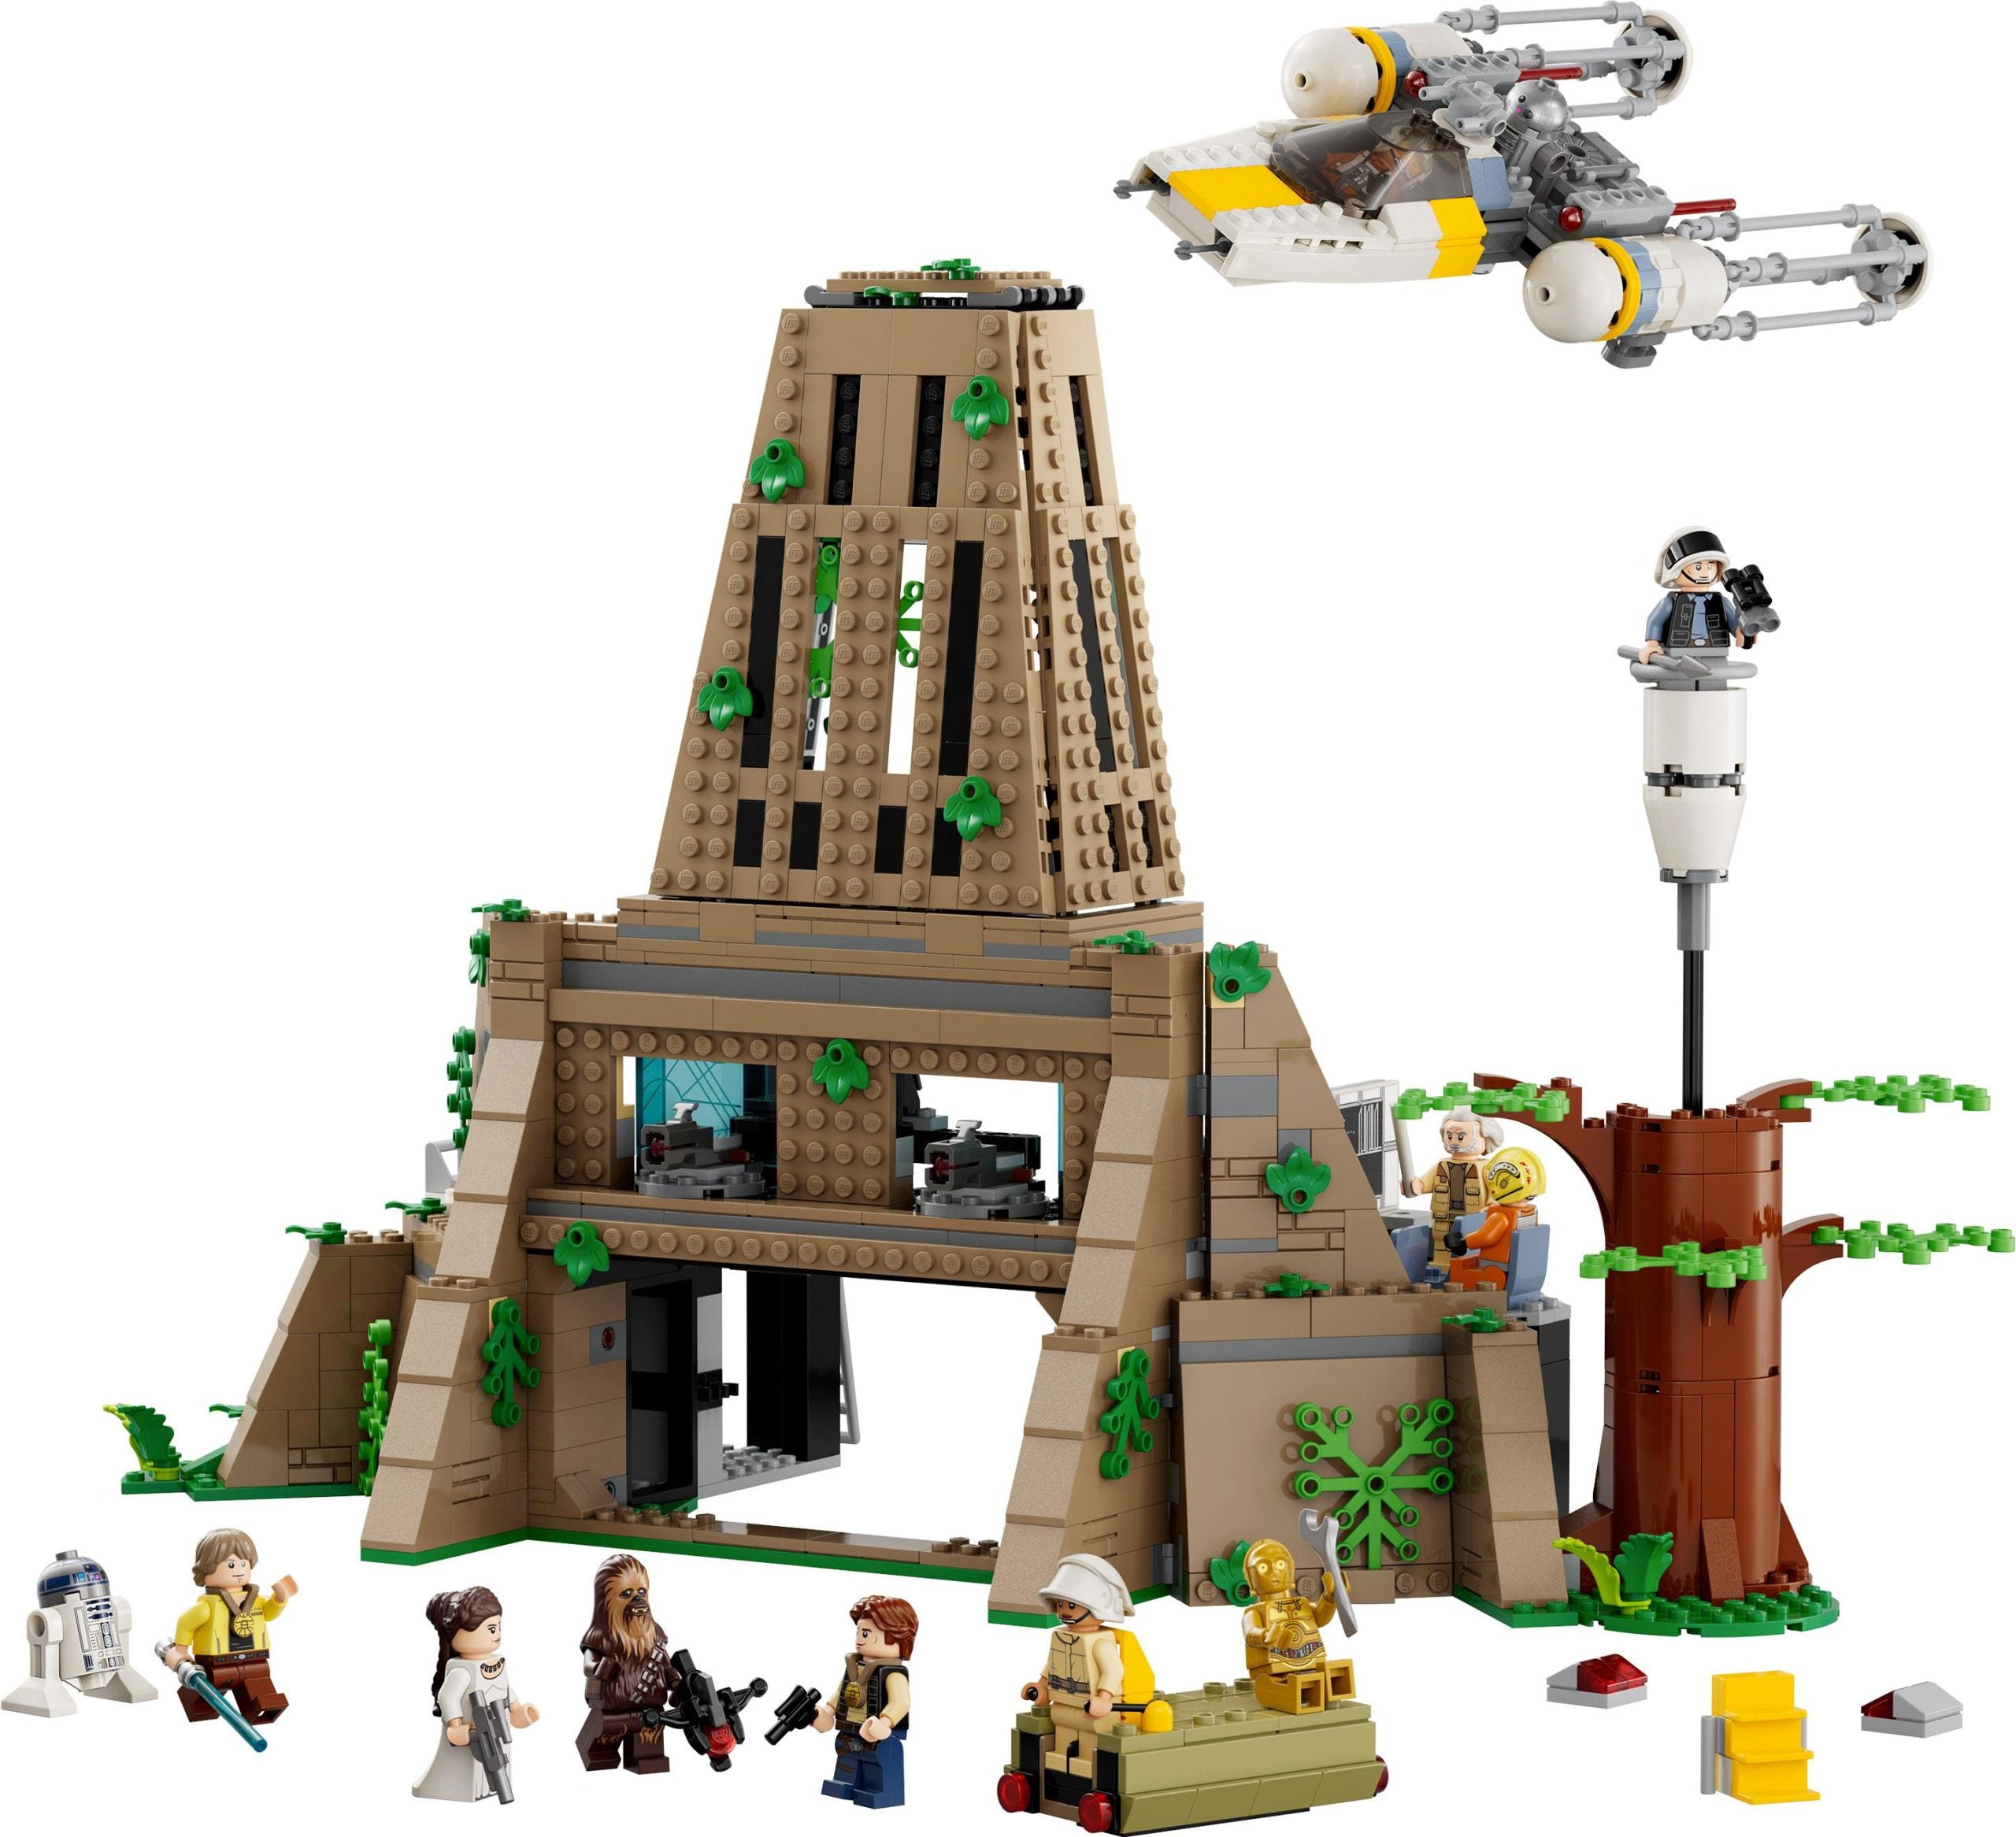 75365  LEGO Star Wars TM Base ribelle su Yavin 4